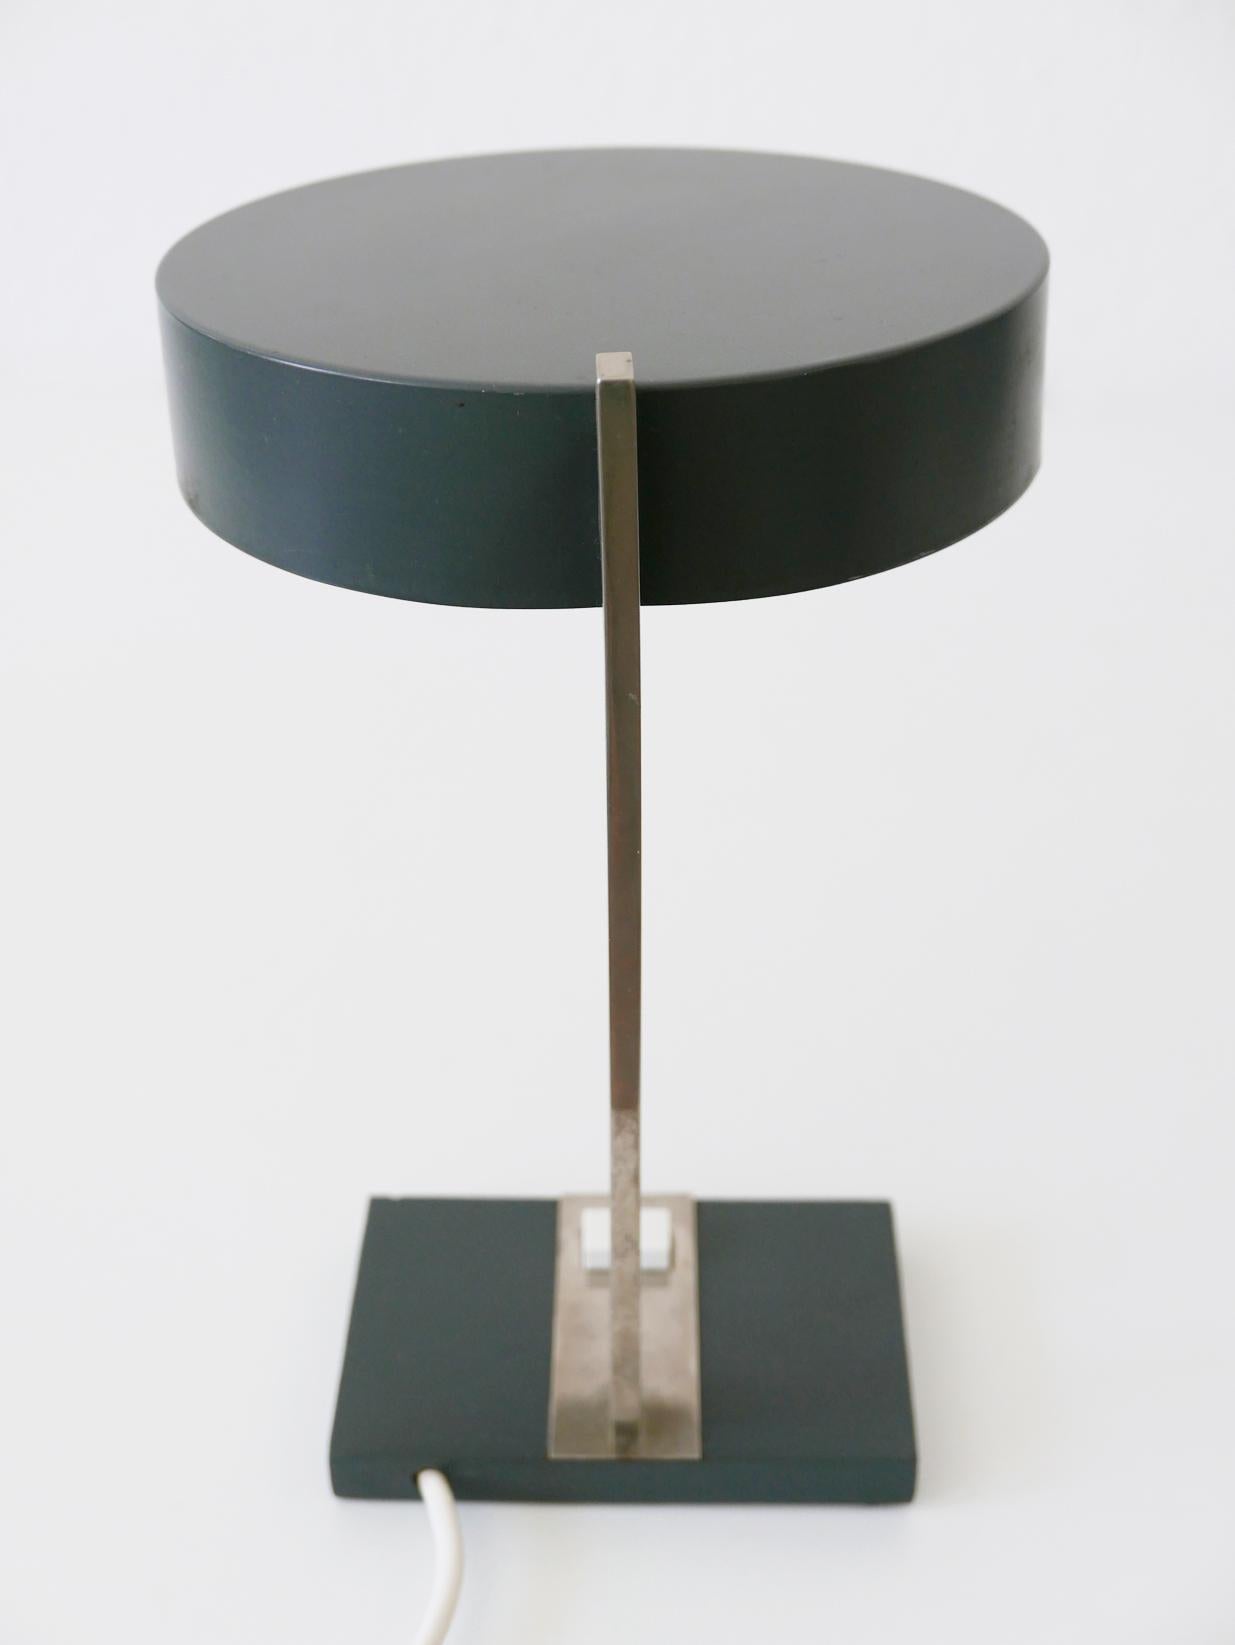 Elegant Mid-Century Modern Table Lamp or Desk Light by Hillebrand, 1960s Germany For Sale 6